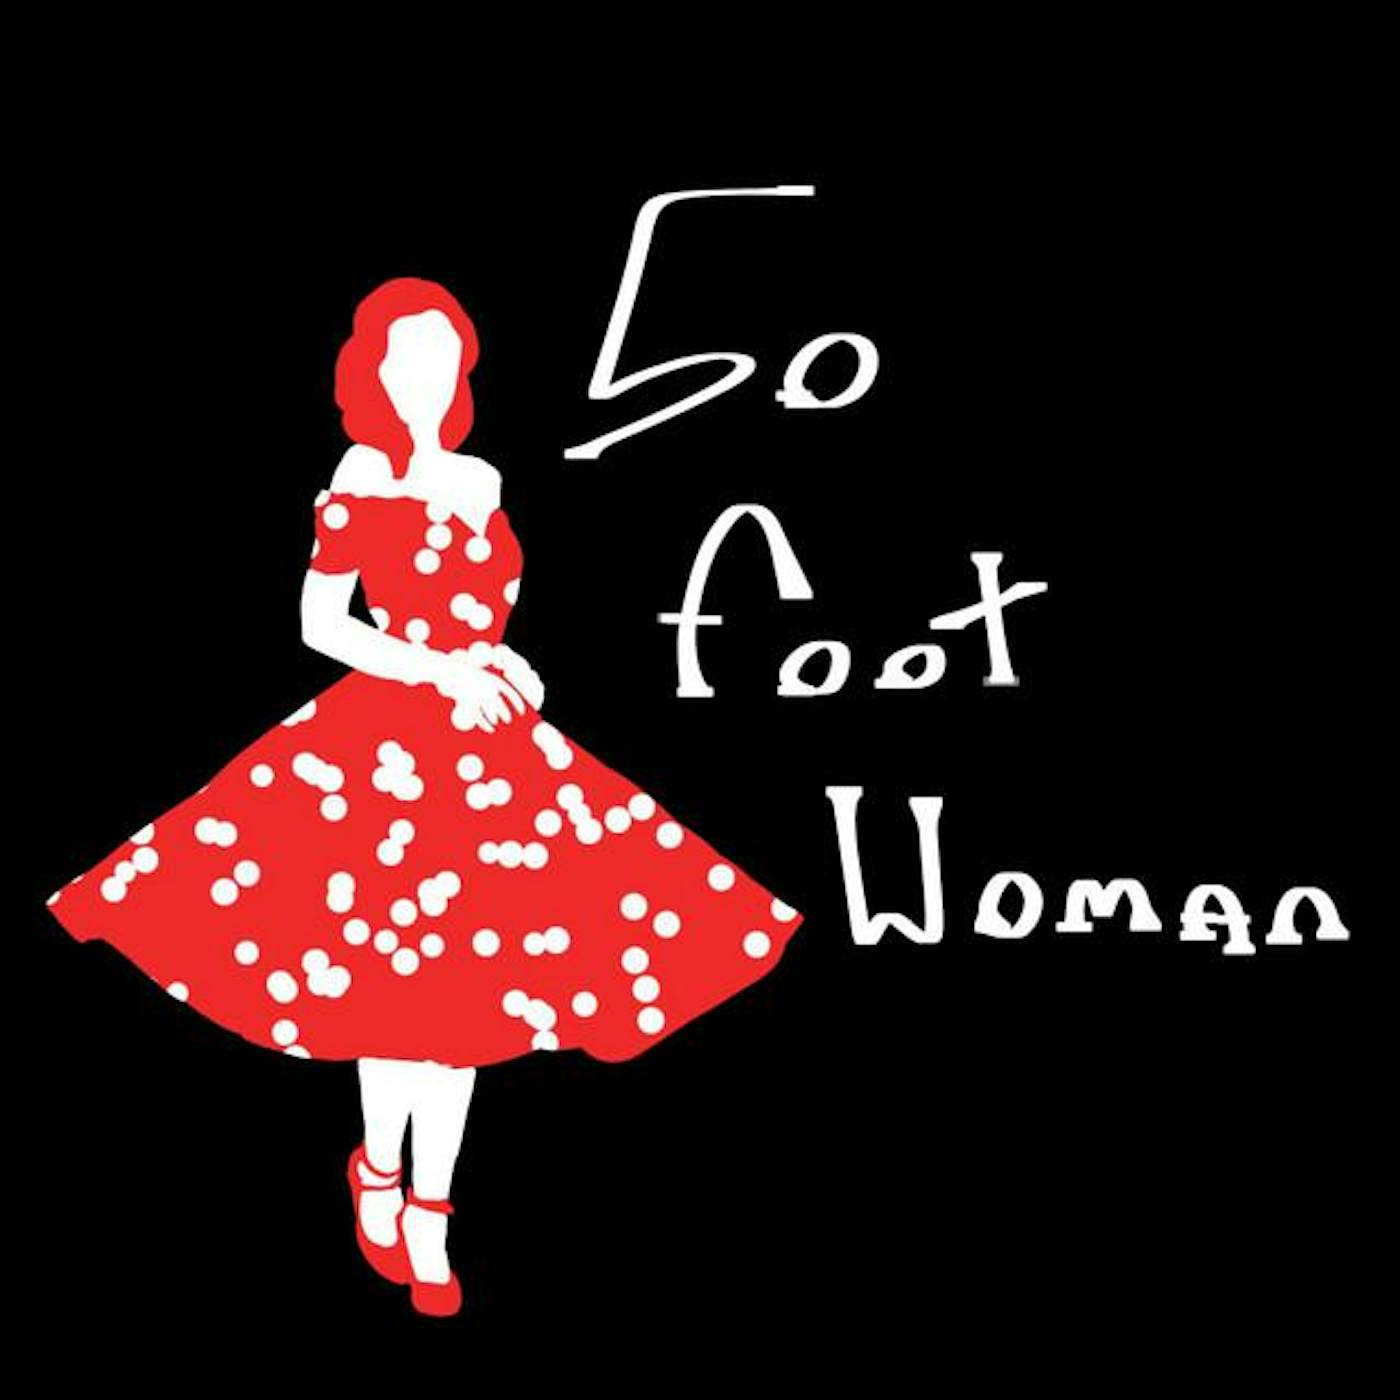 50 Foot Woman